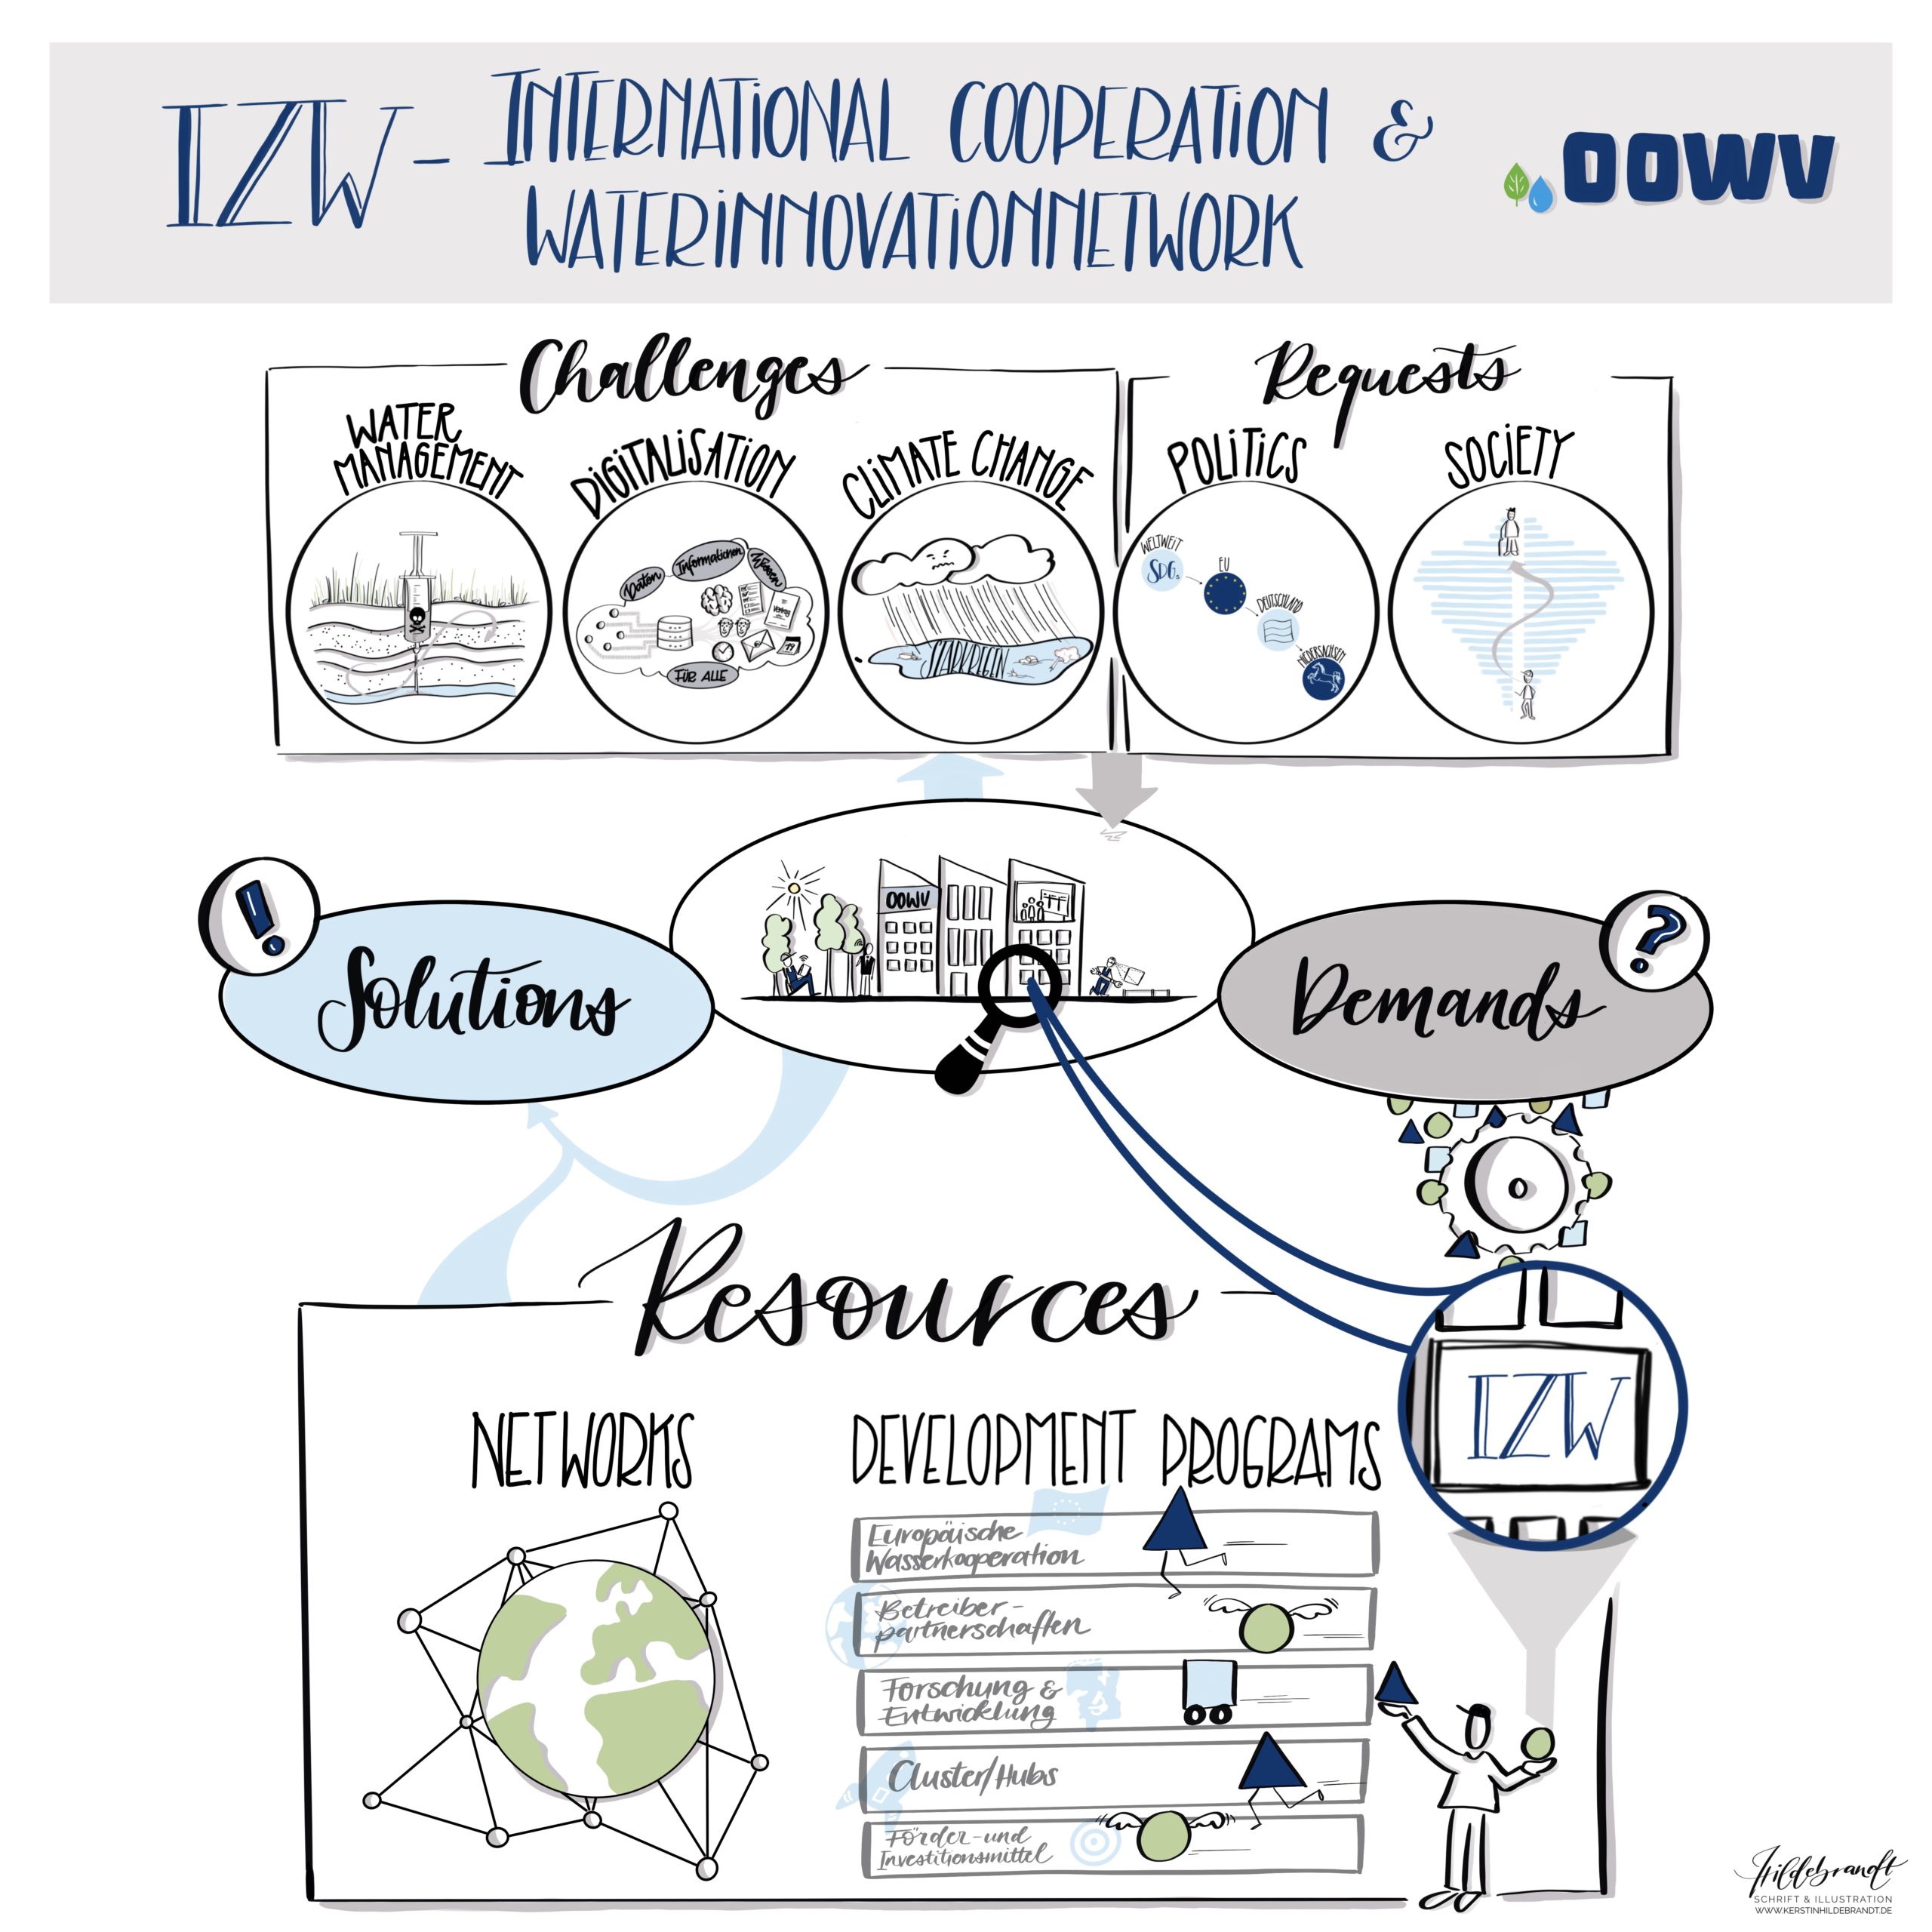 hildebrandt-illustration_OOWV International Cooperation Waterinnovation Network